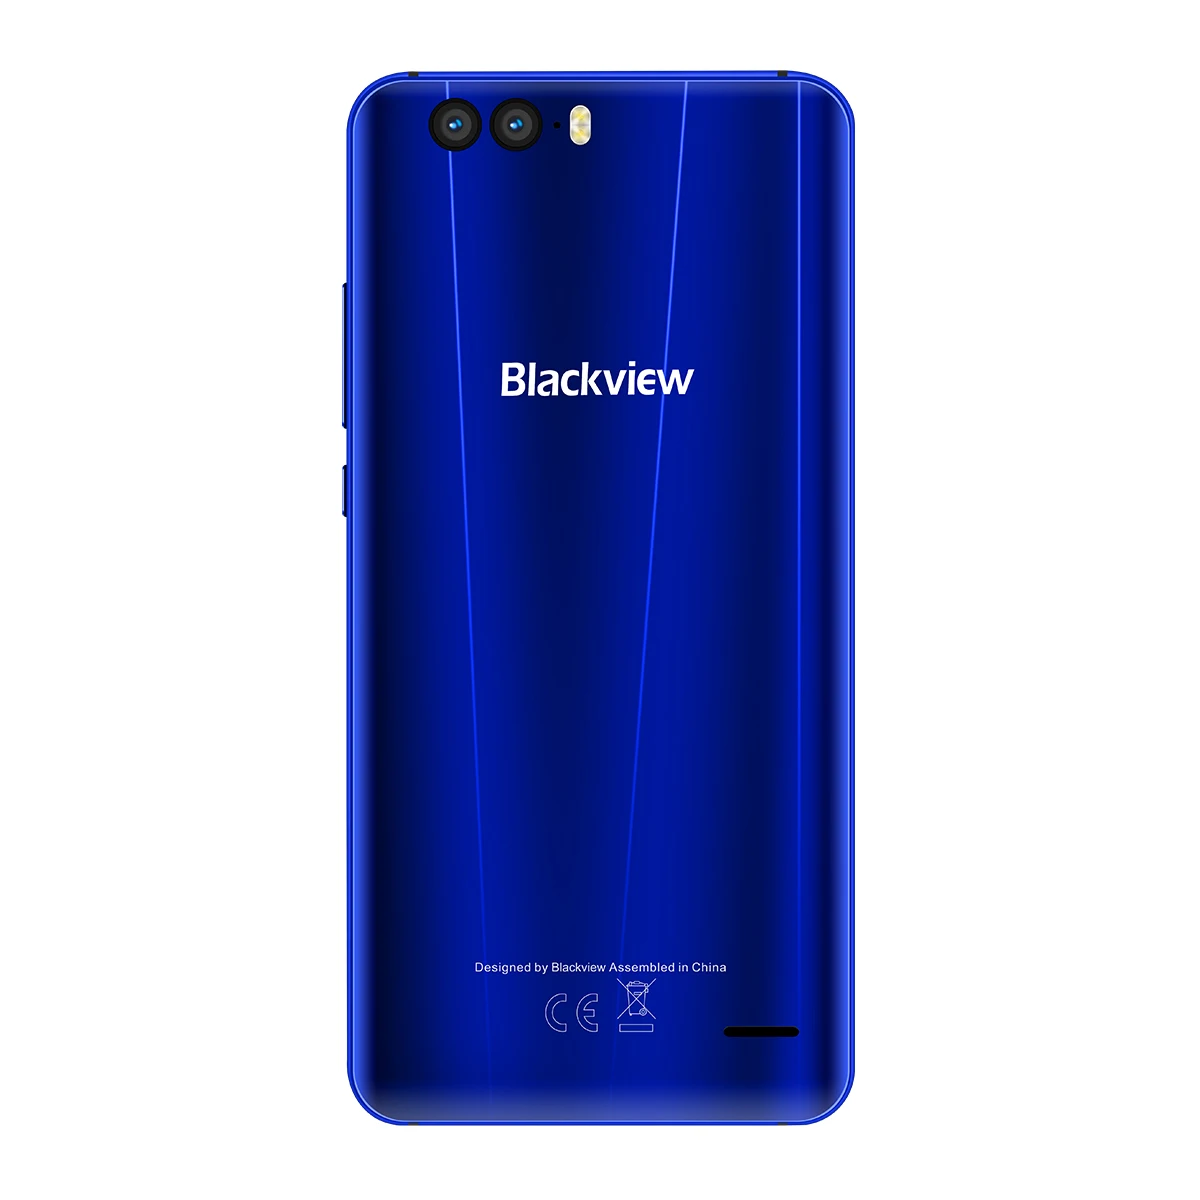 Blackview P6000 смартфон Helio P25 6180 мАч супер батарея 6 ГБ 64 5 дюймов FHD 21 МП две камеры Android 7 1